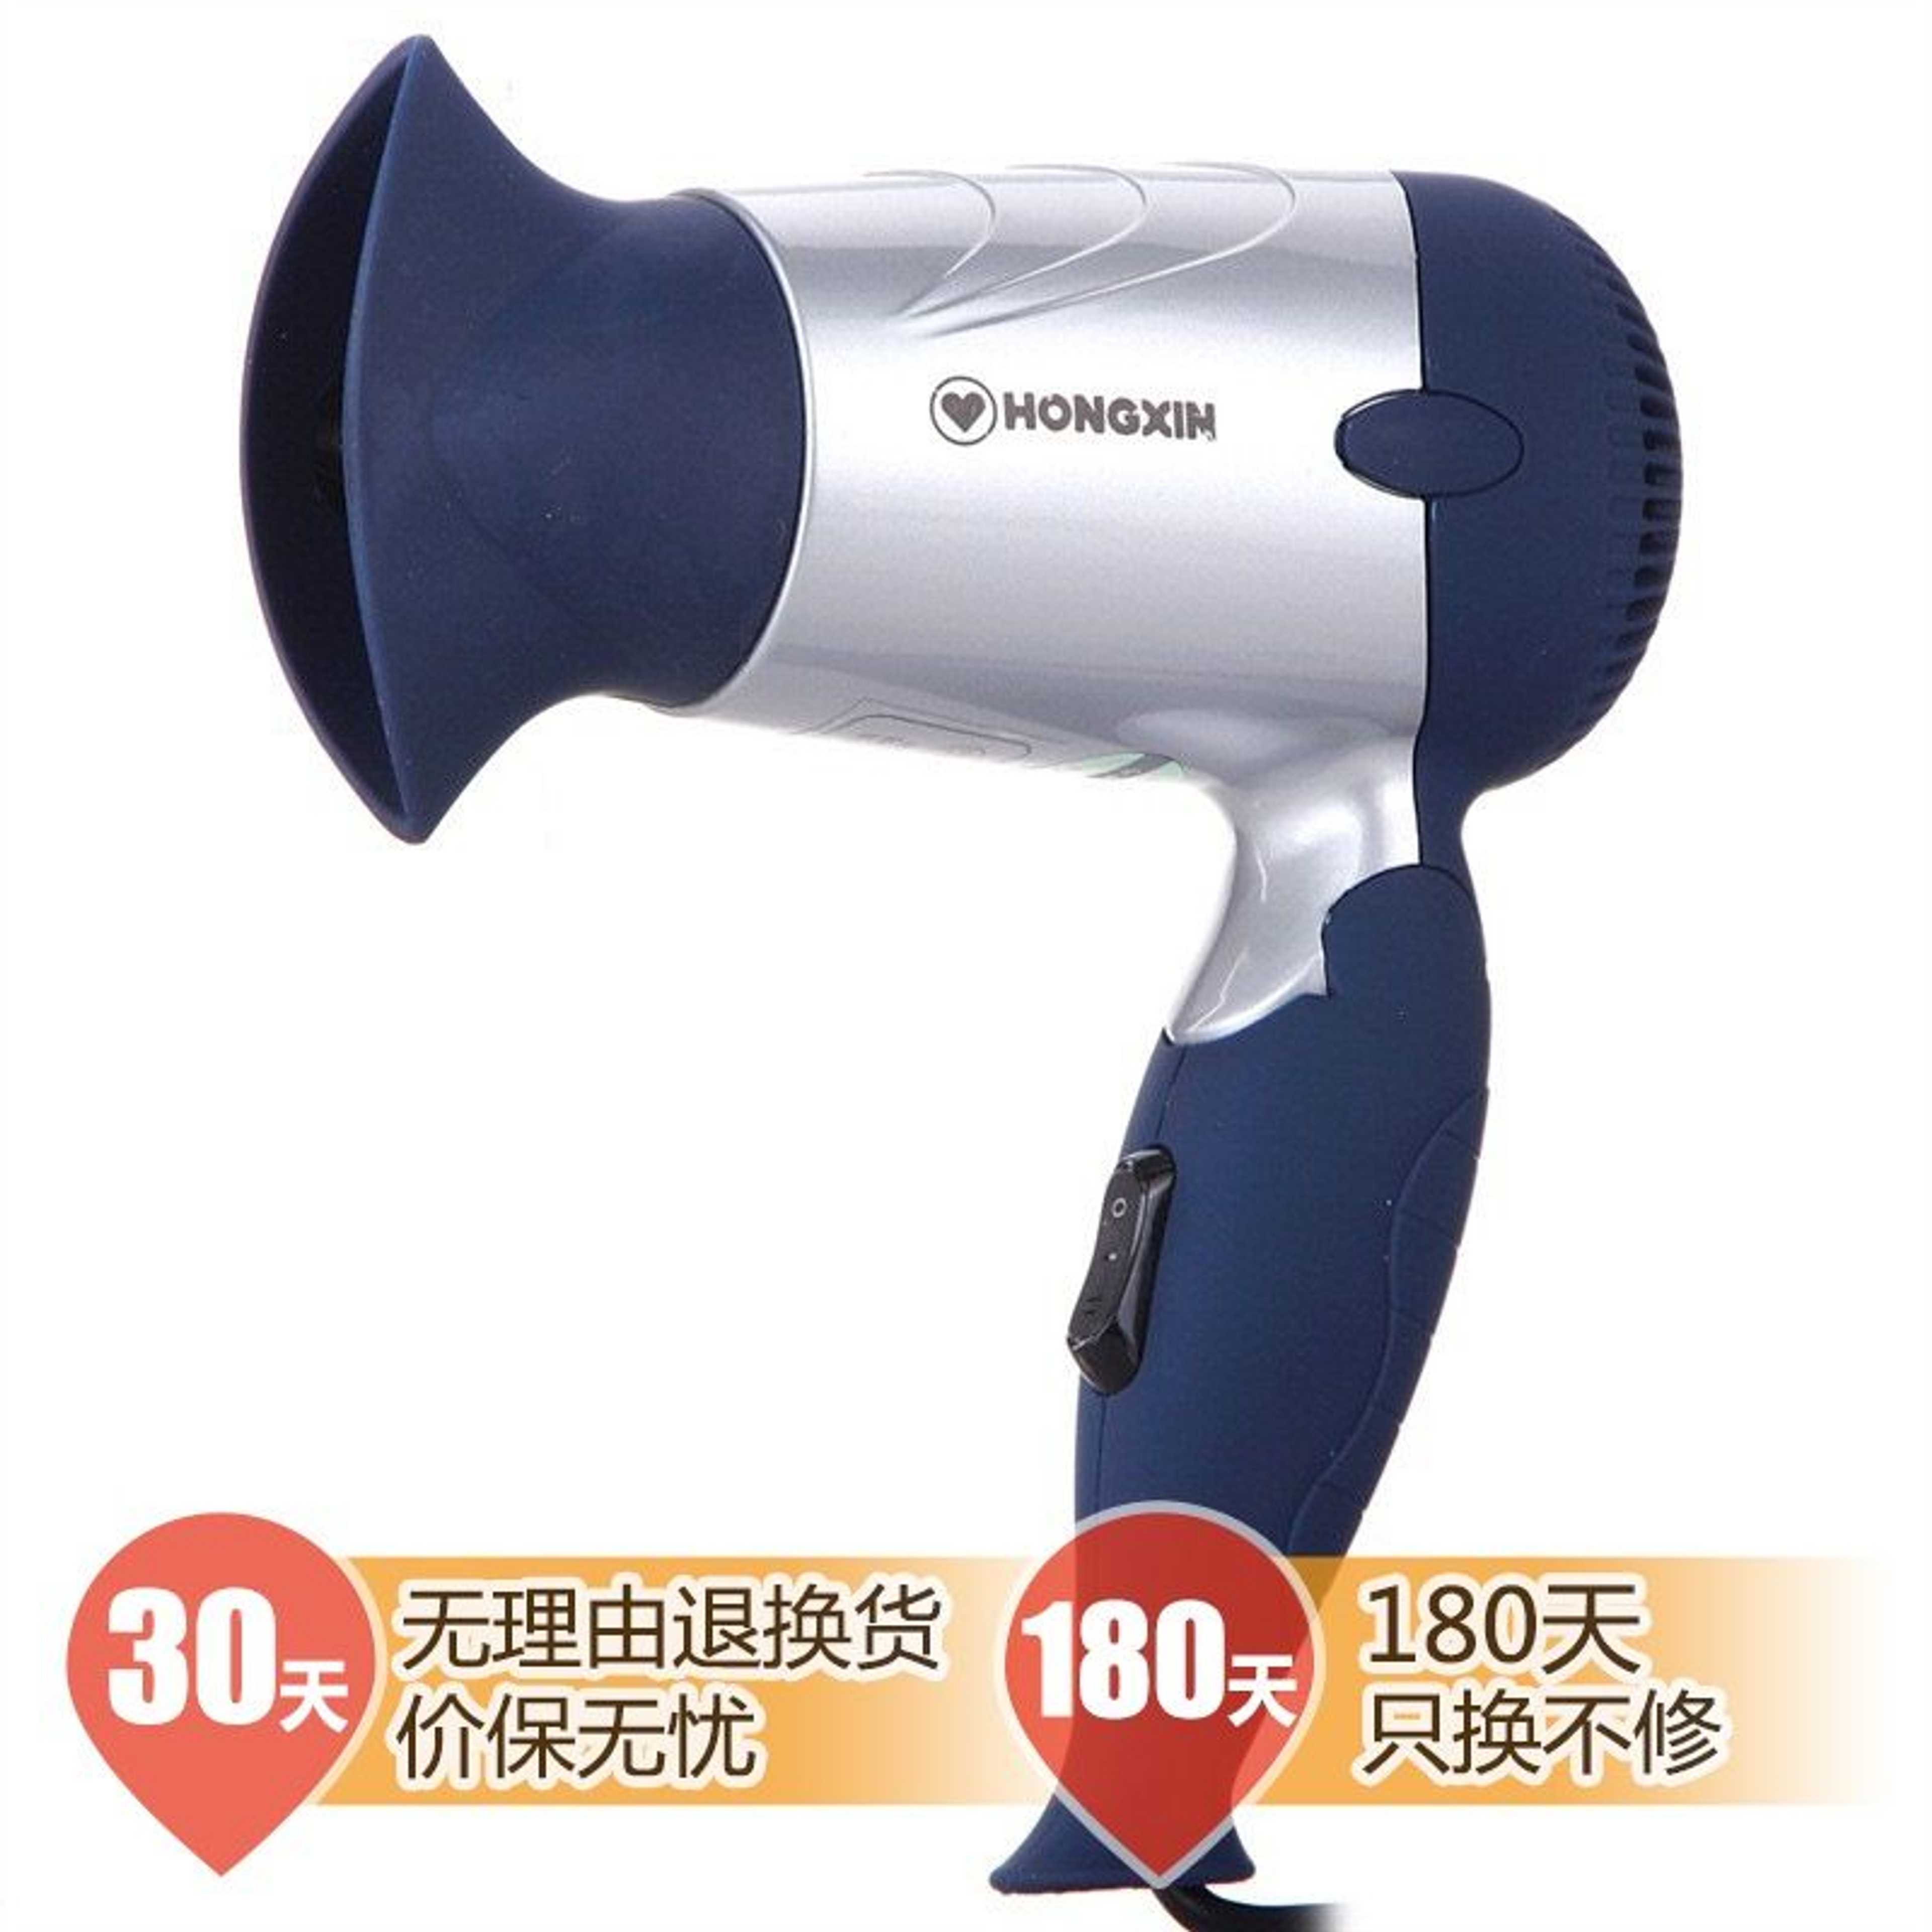 Hongxin RH7188 mini portable hair foldable orignal dryer for woman man girl boy best in lowest price Professional Hair foldable orignal dryer & Air Blower for Men's & women's